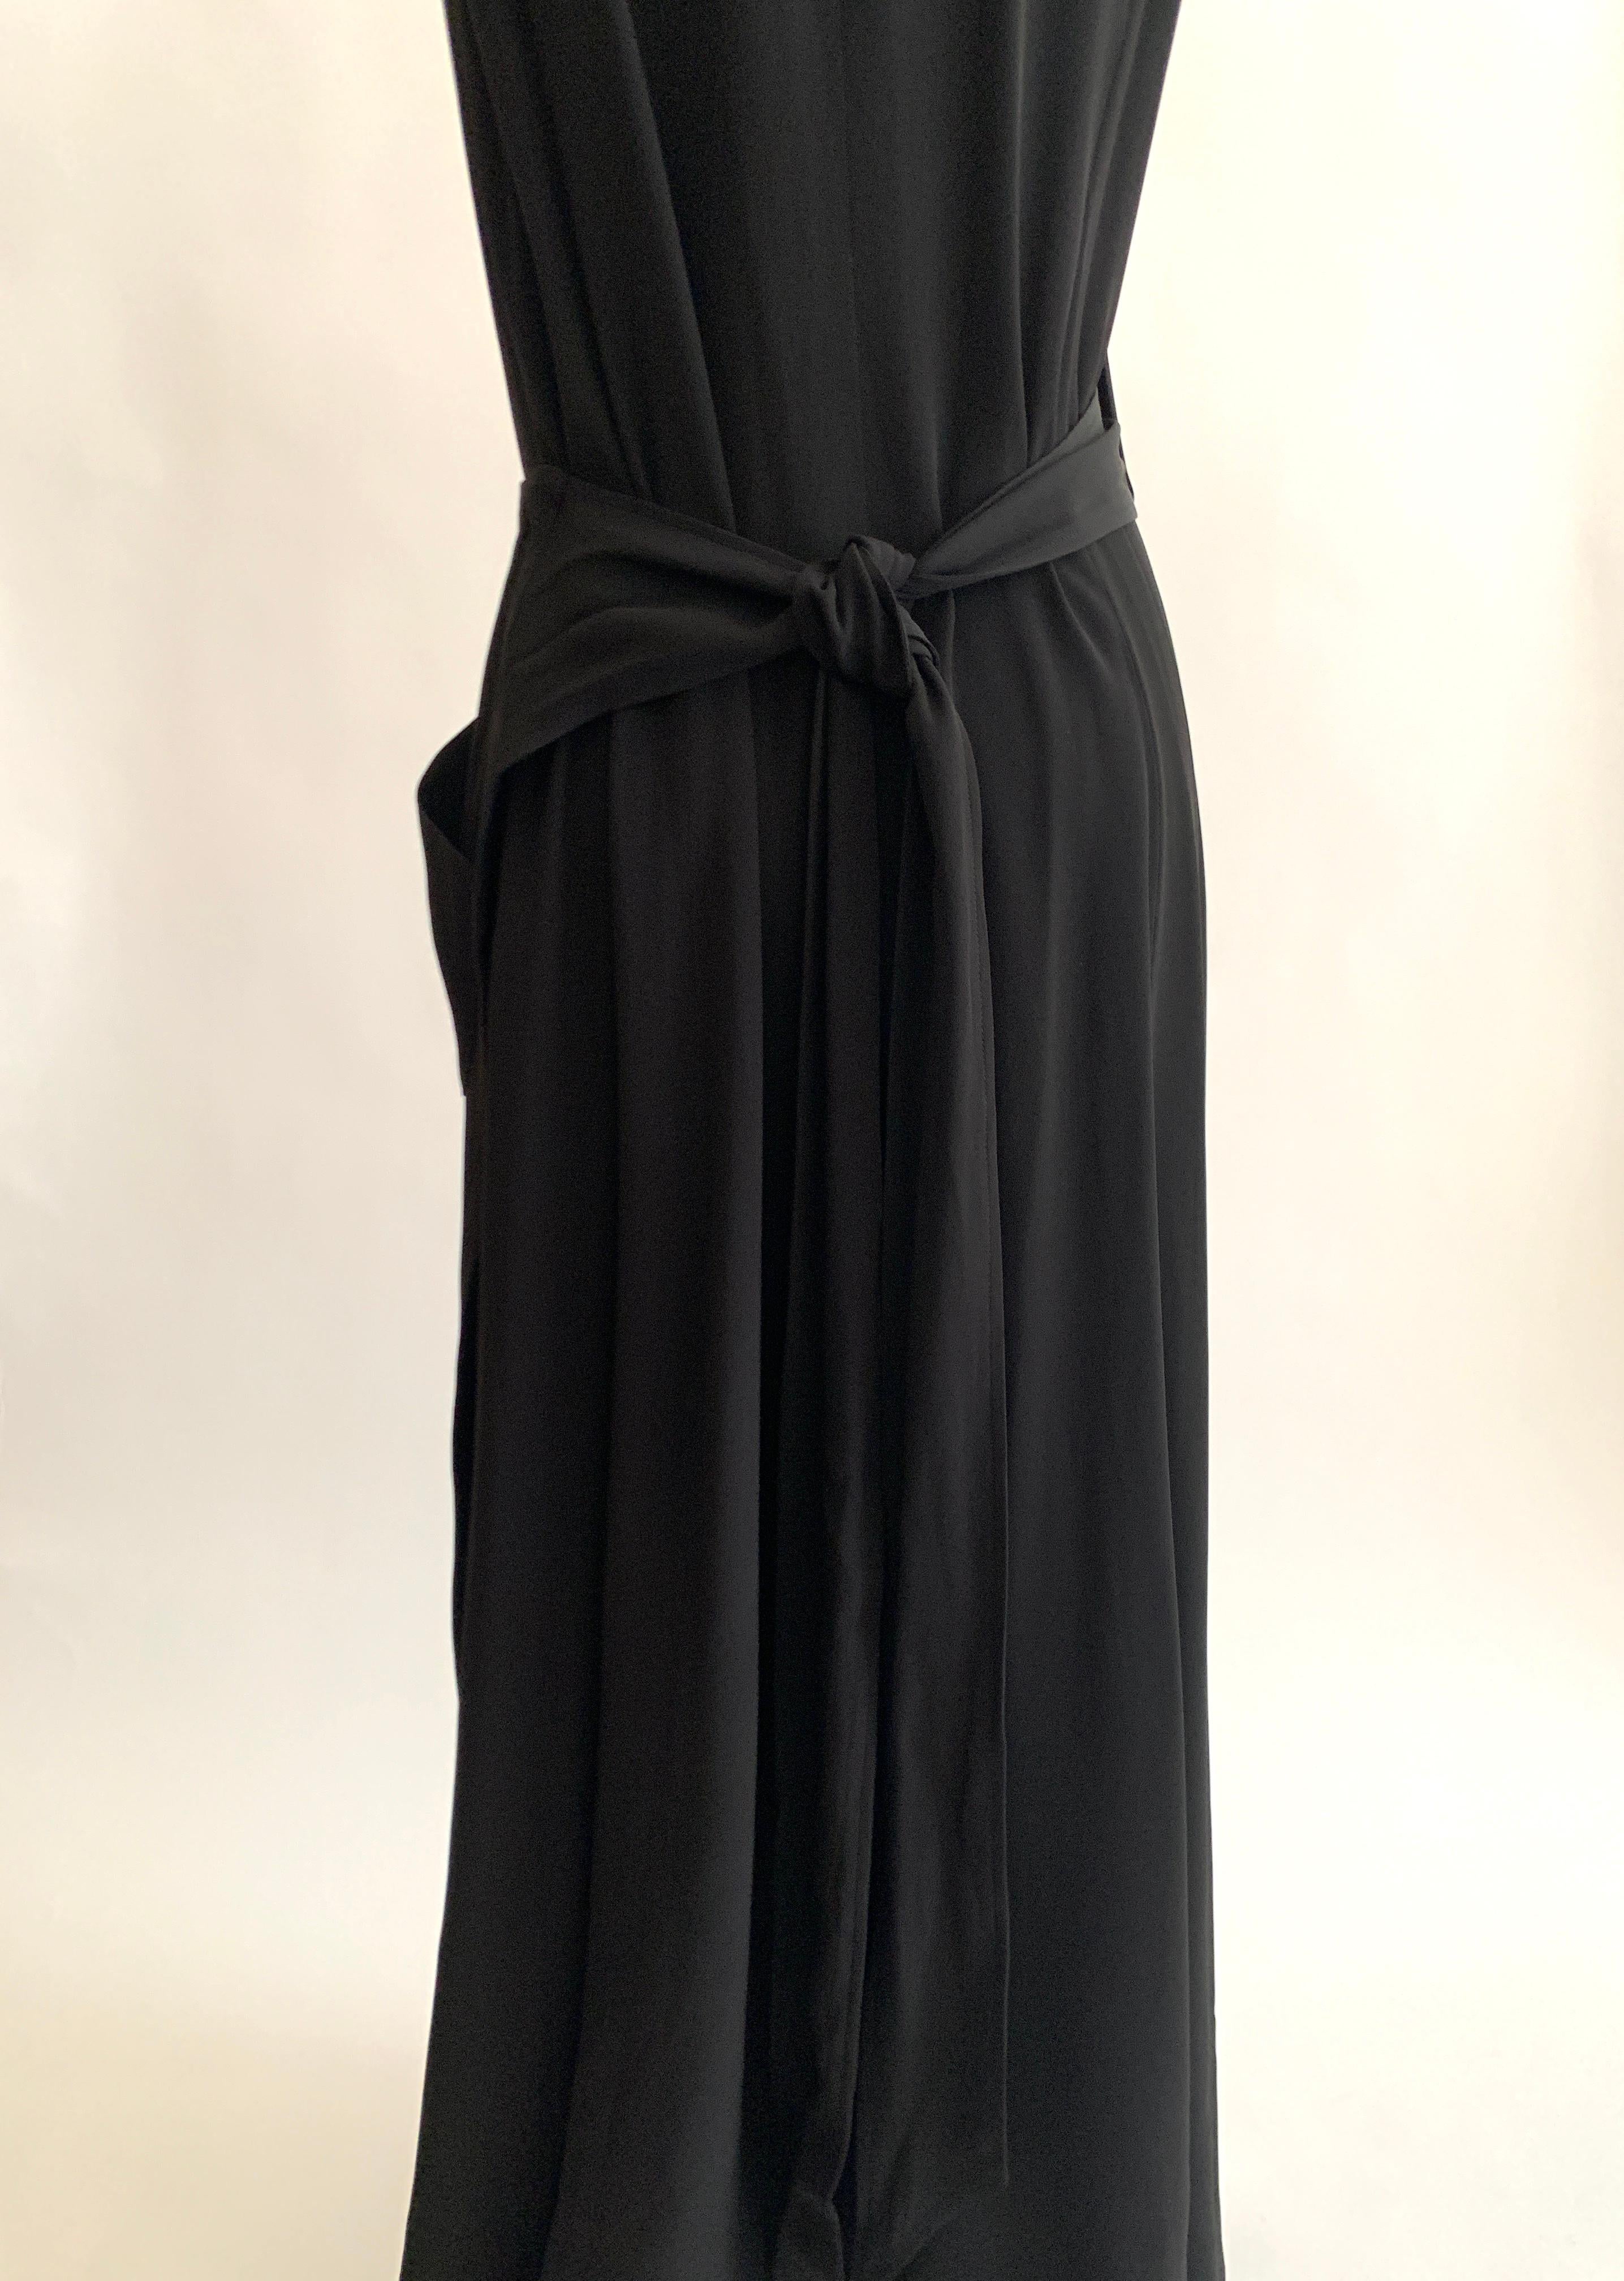 Christian Lacroix 1990s Black Gold Accent Pocket Front Maxi Wrap Dress Gown For Sale 1